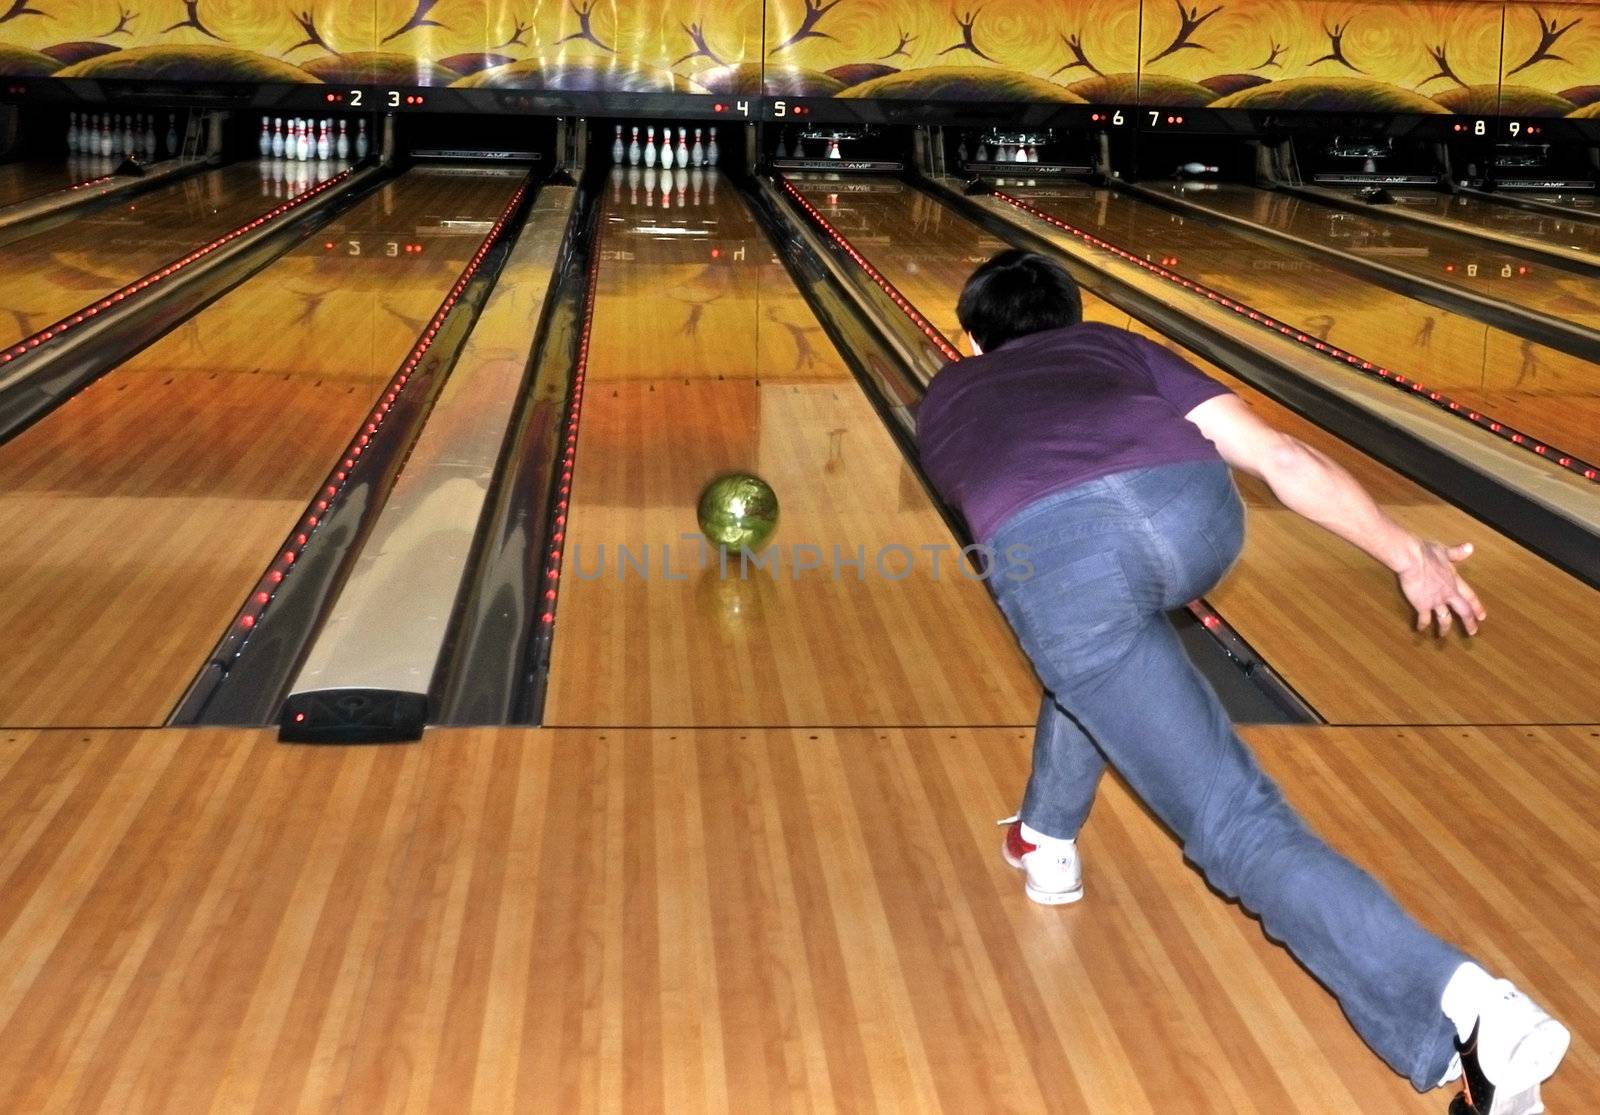 	
man plays bowling